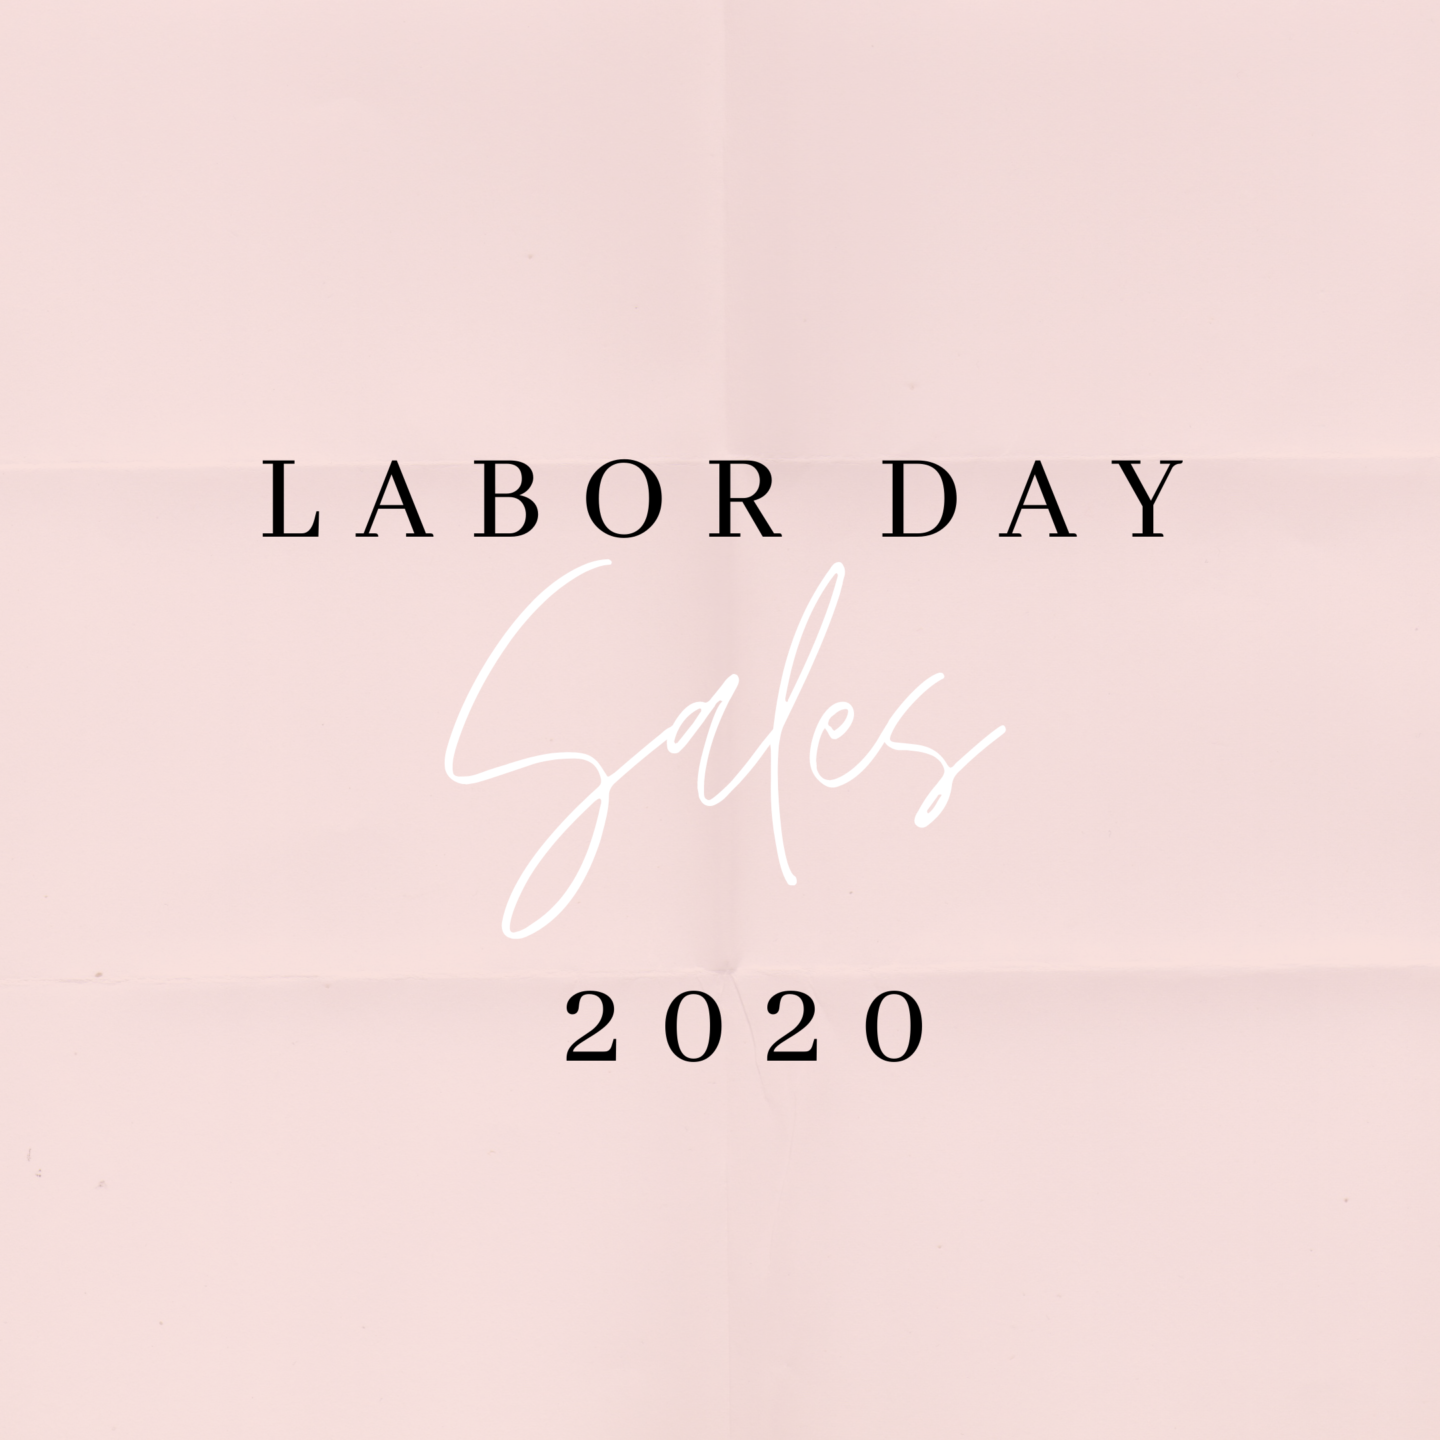 Labor Day Sales 2020